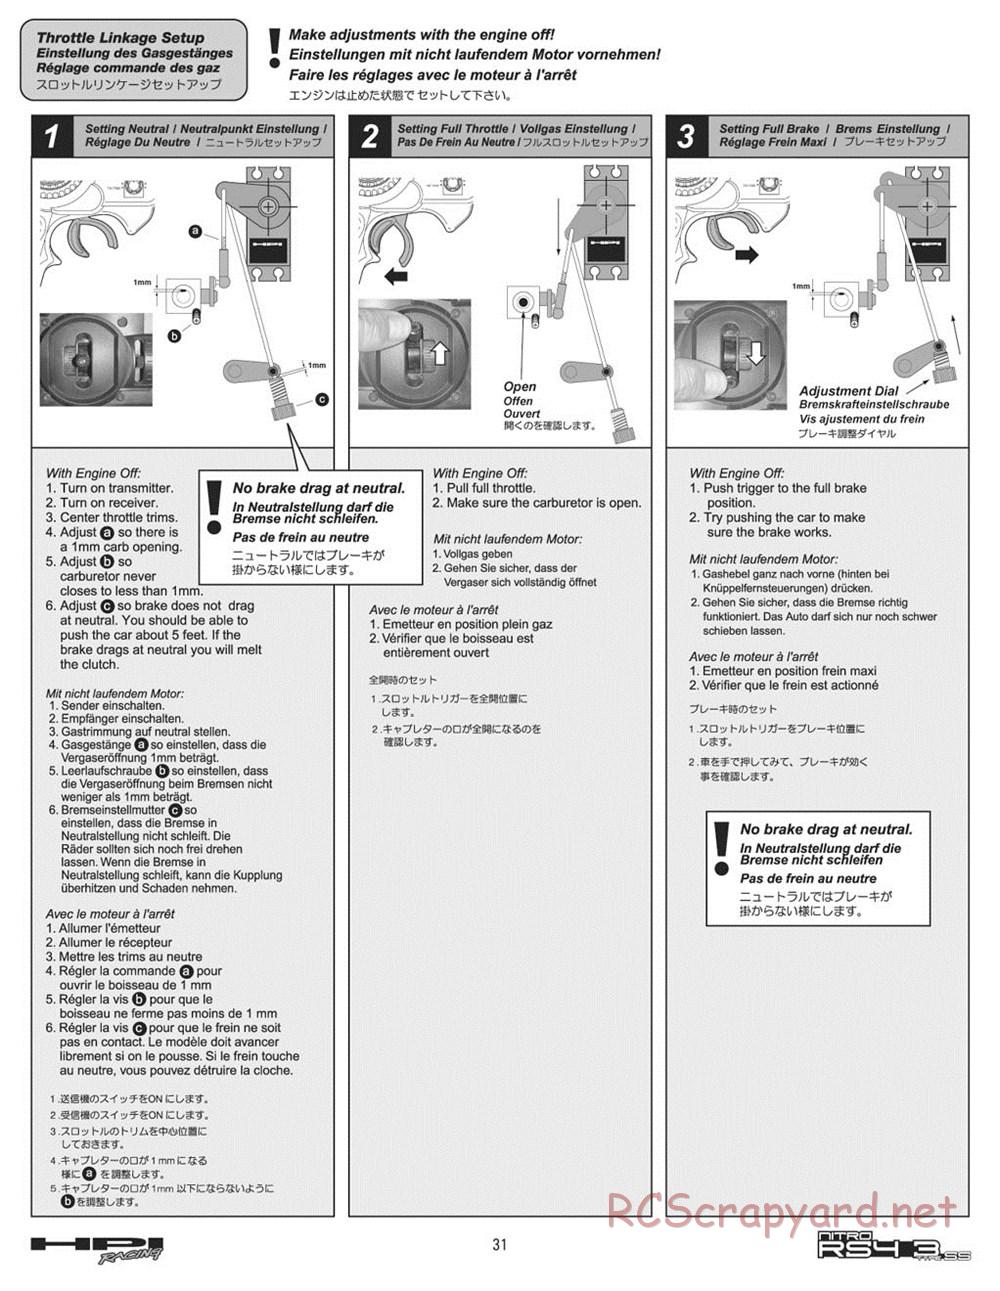 HPI - Nitro RS4 3 SS (2002) - Manual - Page 31